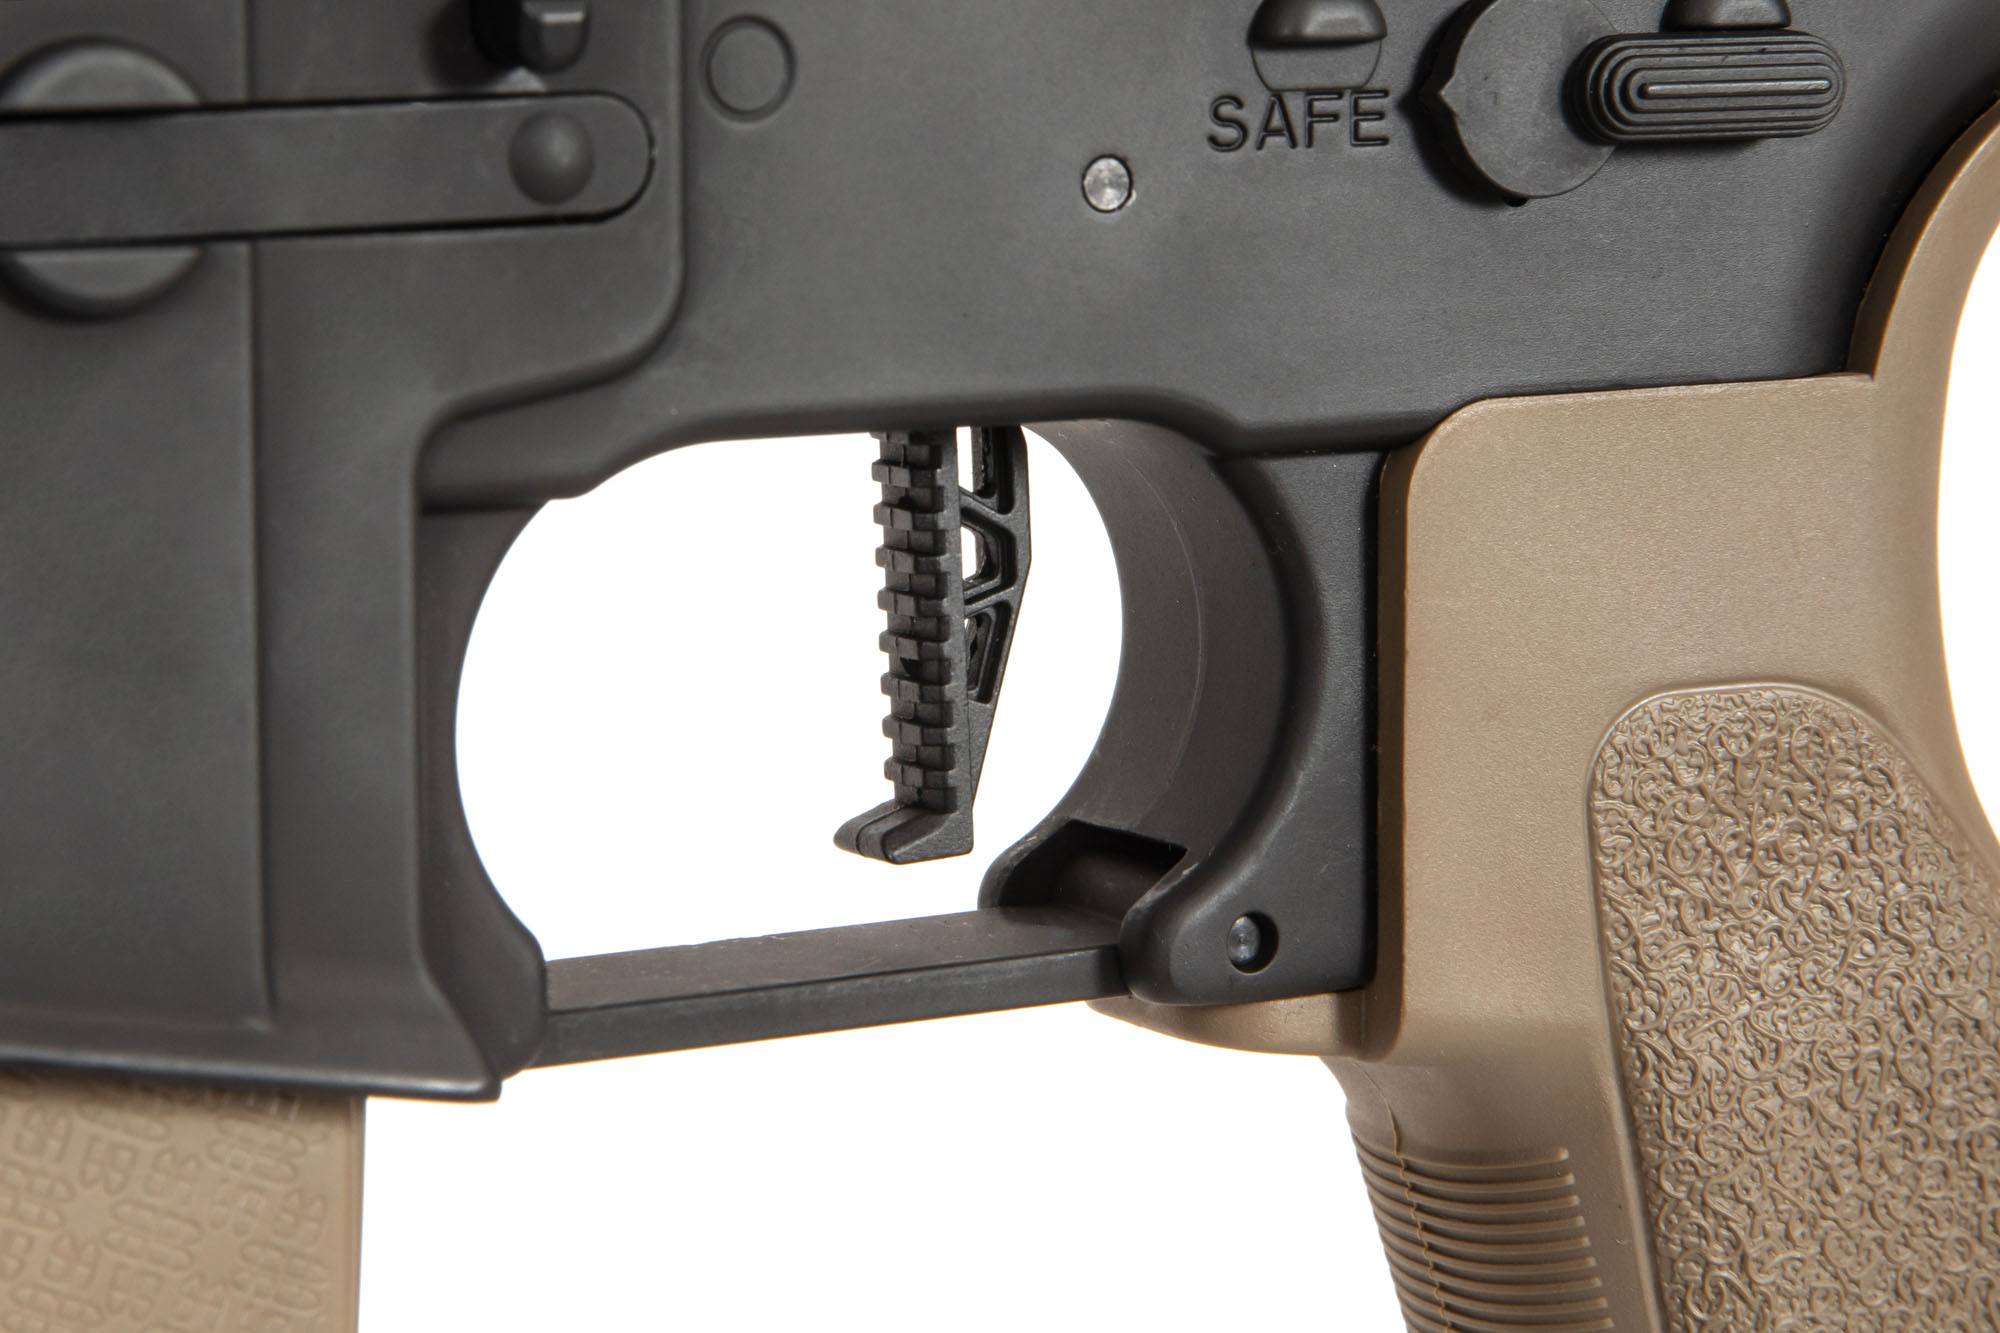 RRA SA-E07 EDGE ™ 2.0 Carbine Replica - Half-Tan by Specna Arms on Airsoft Mania Europe